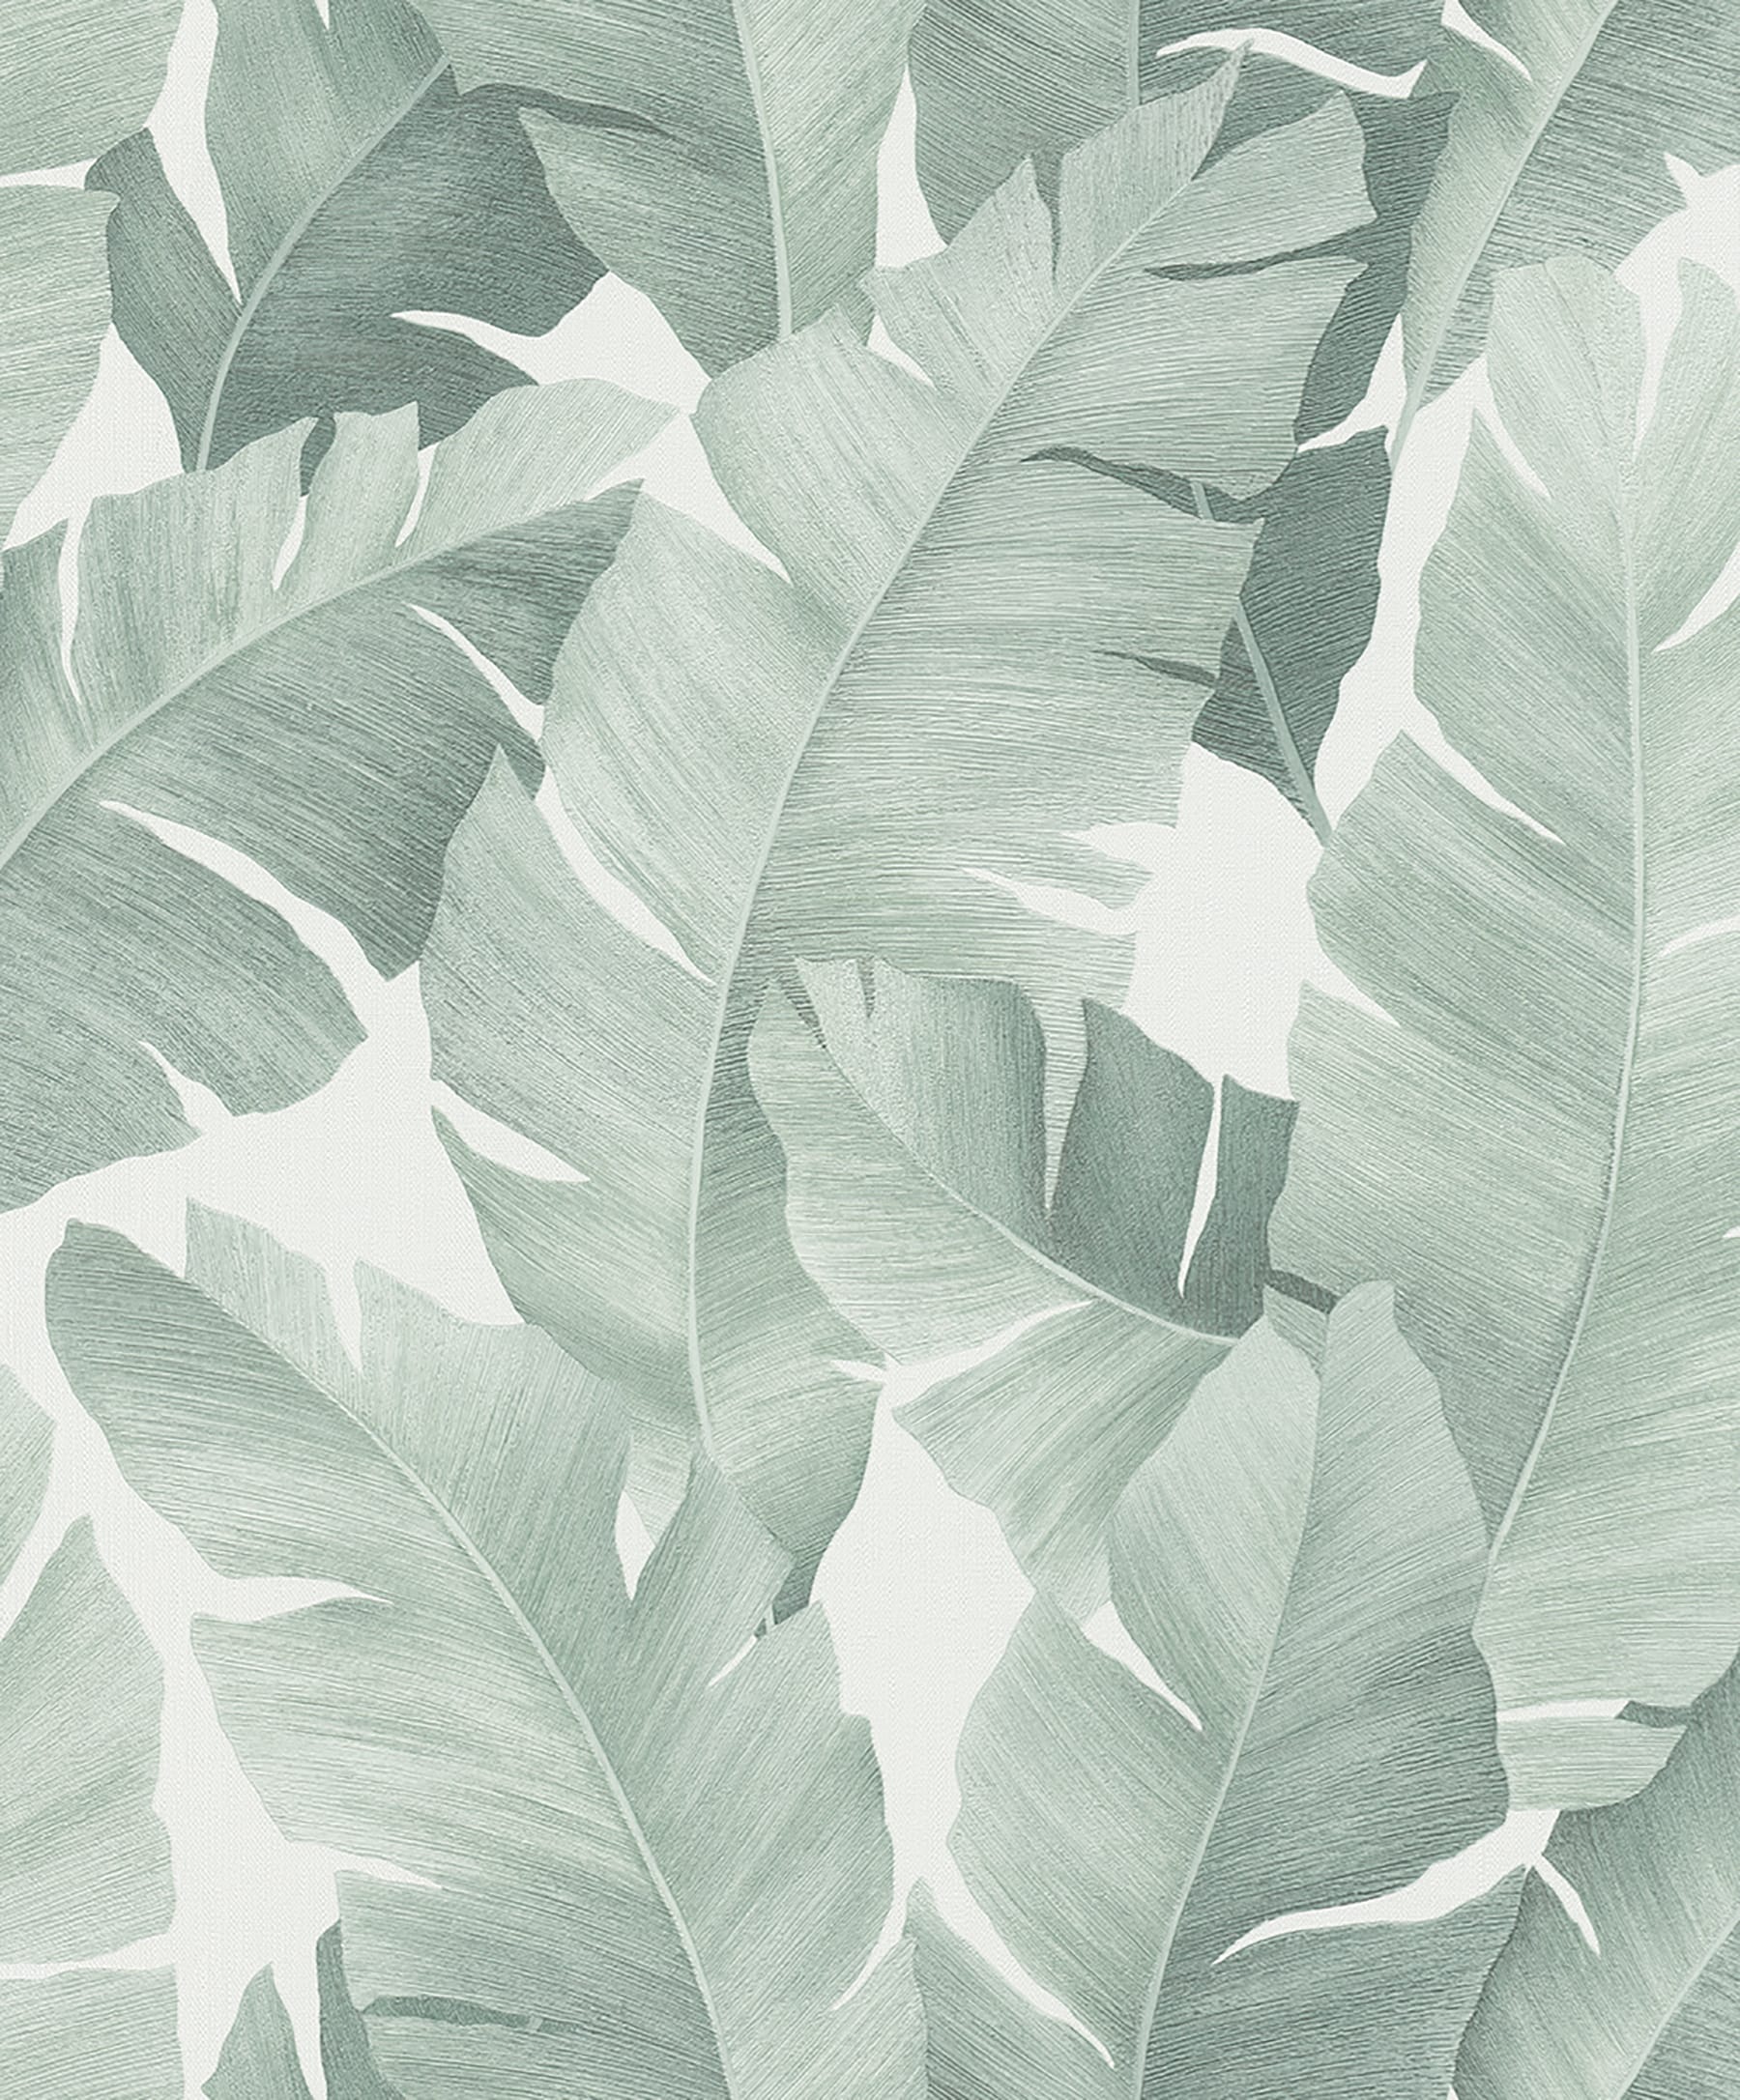 Marburg Attalea Green Palm Leaf Wallpaper at Lowes.com